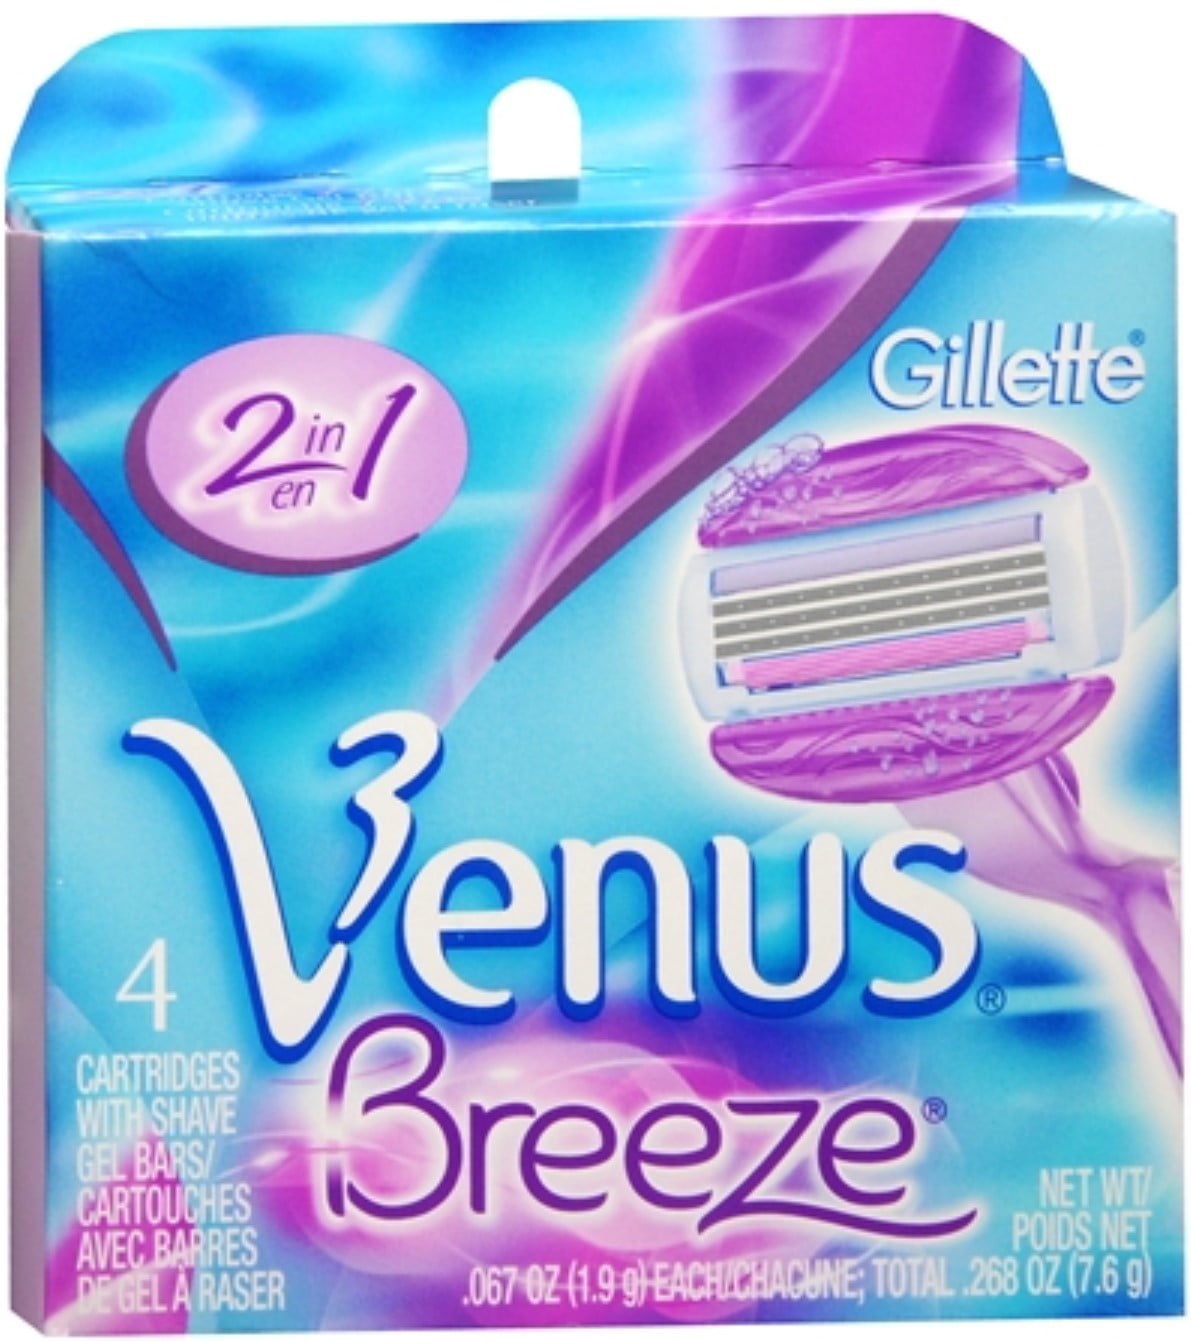 Gillette Venus Breeze Cartridges 4 Each (Pack of 2) - Walmart.com ...